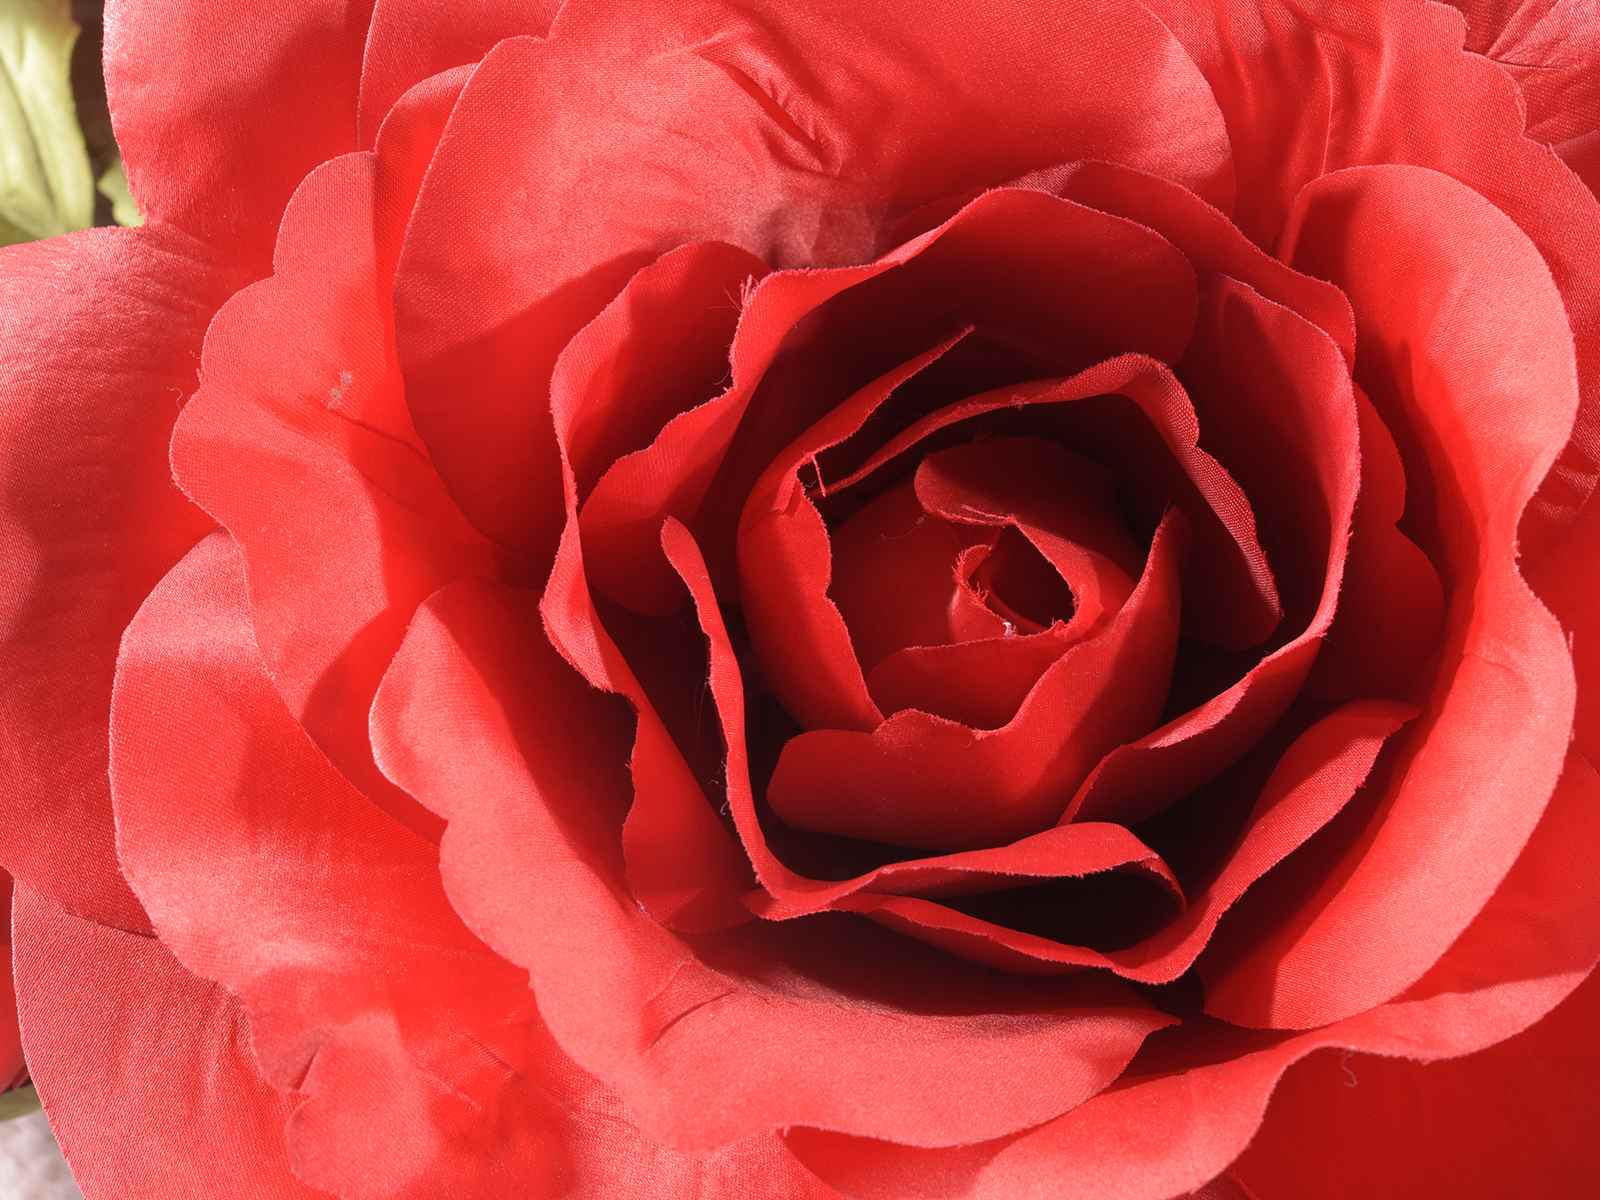 Rose géante en tissu rouge avec bourgeons (56.42.92) - Art From Italy